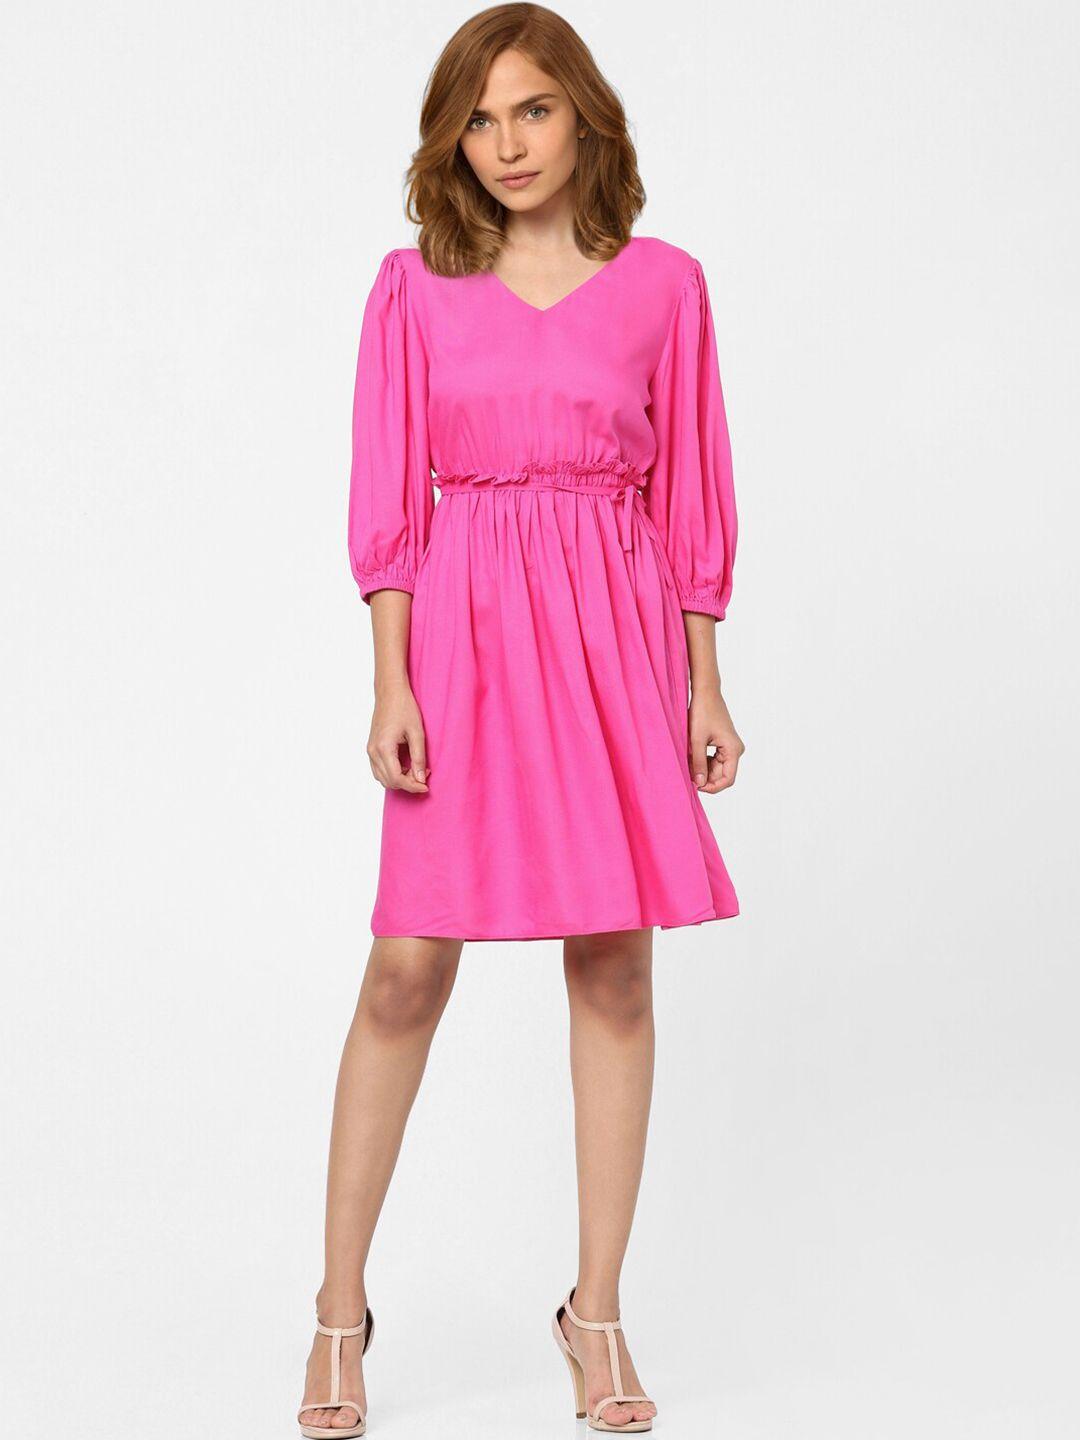 vero moda pink v-neck fit & flare dress